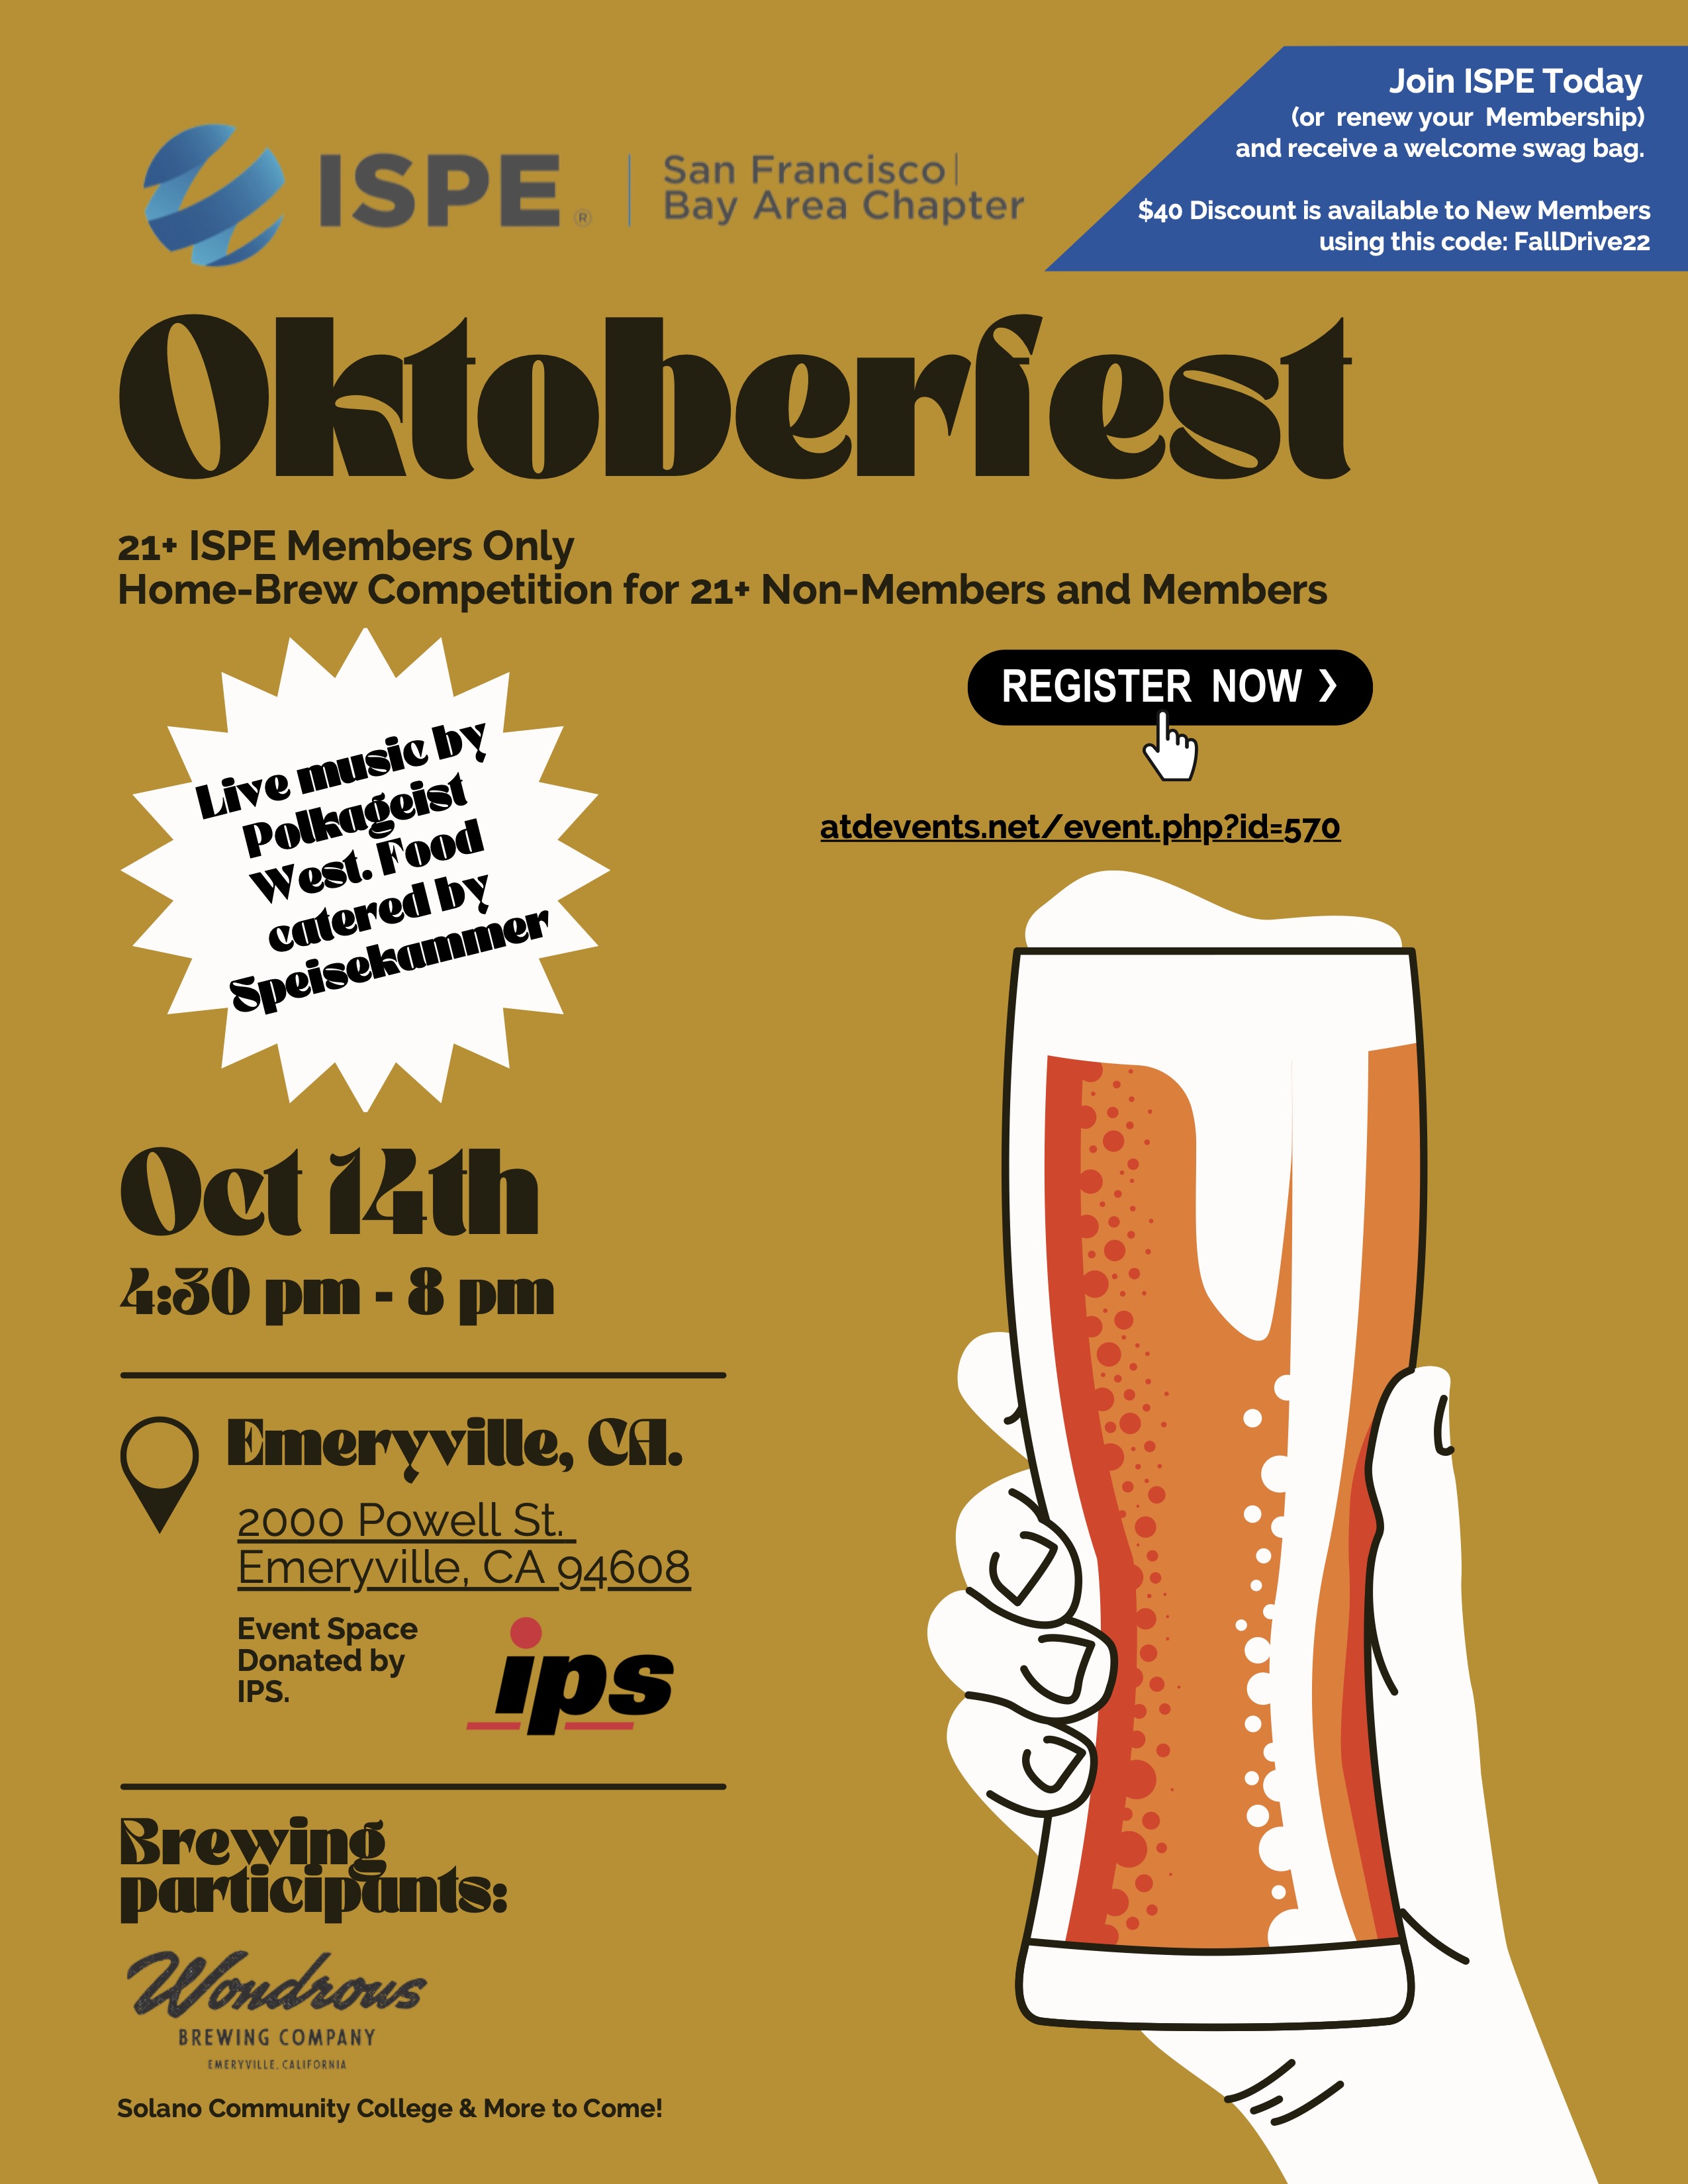 ISPE SF Oktoberfest Info Graphic